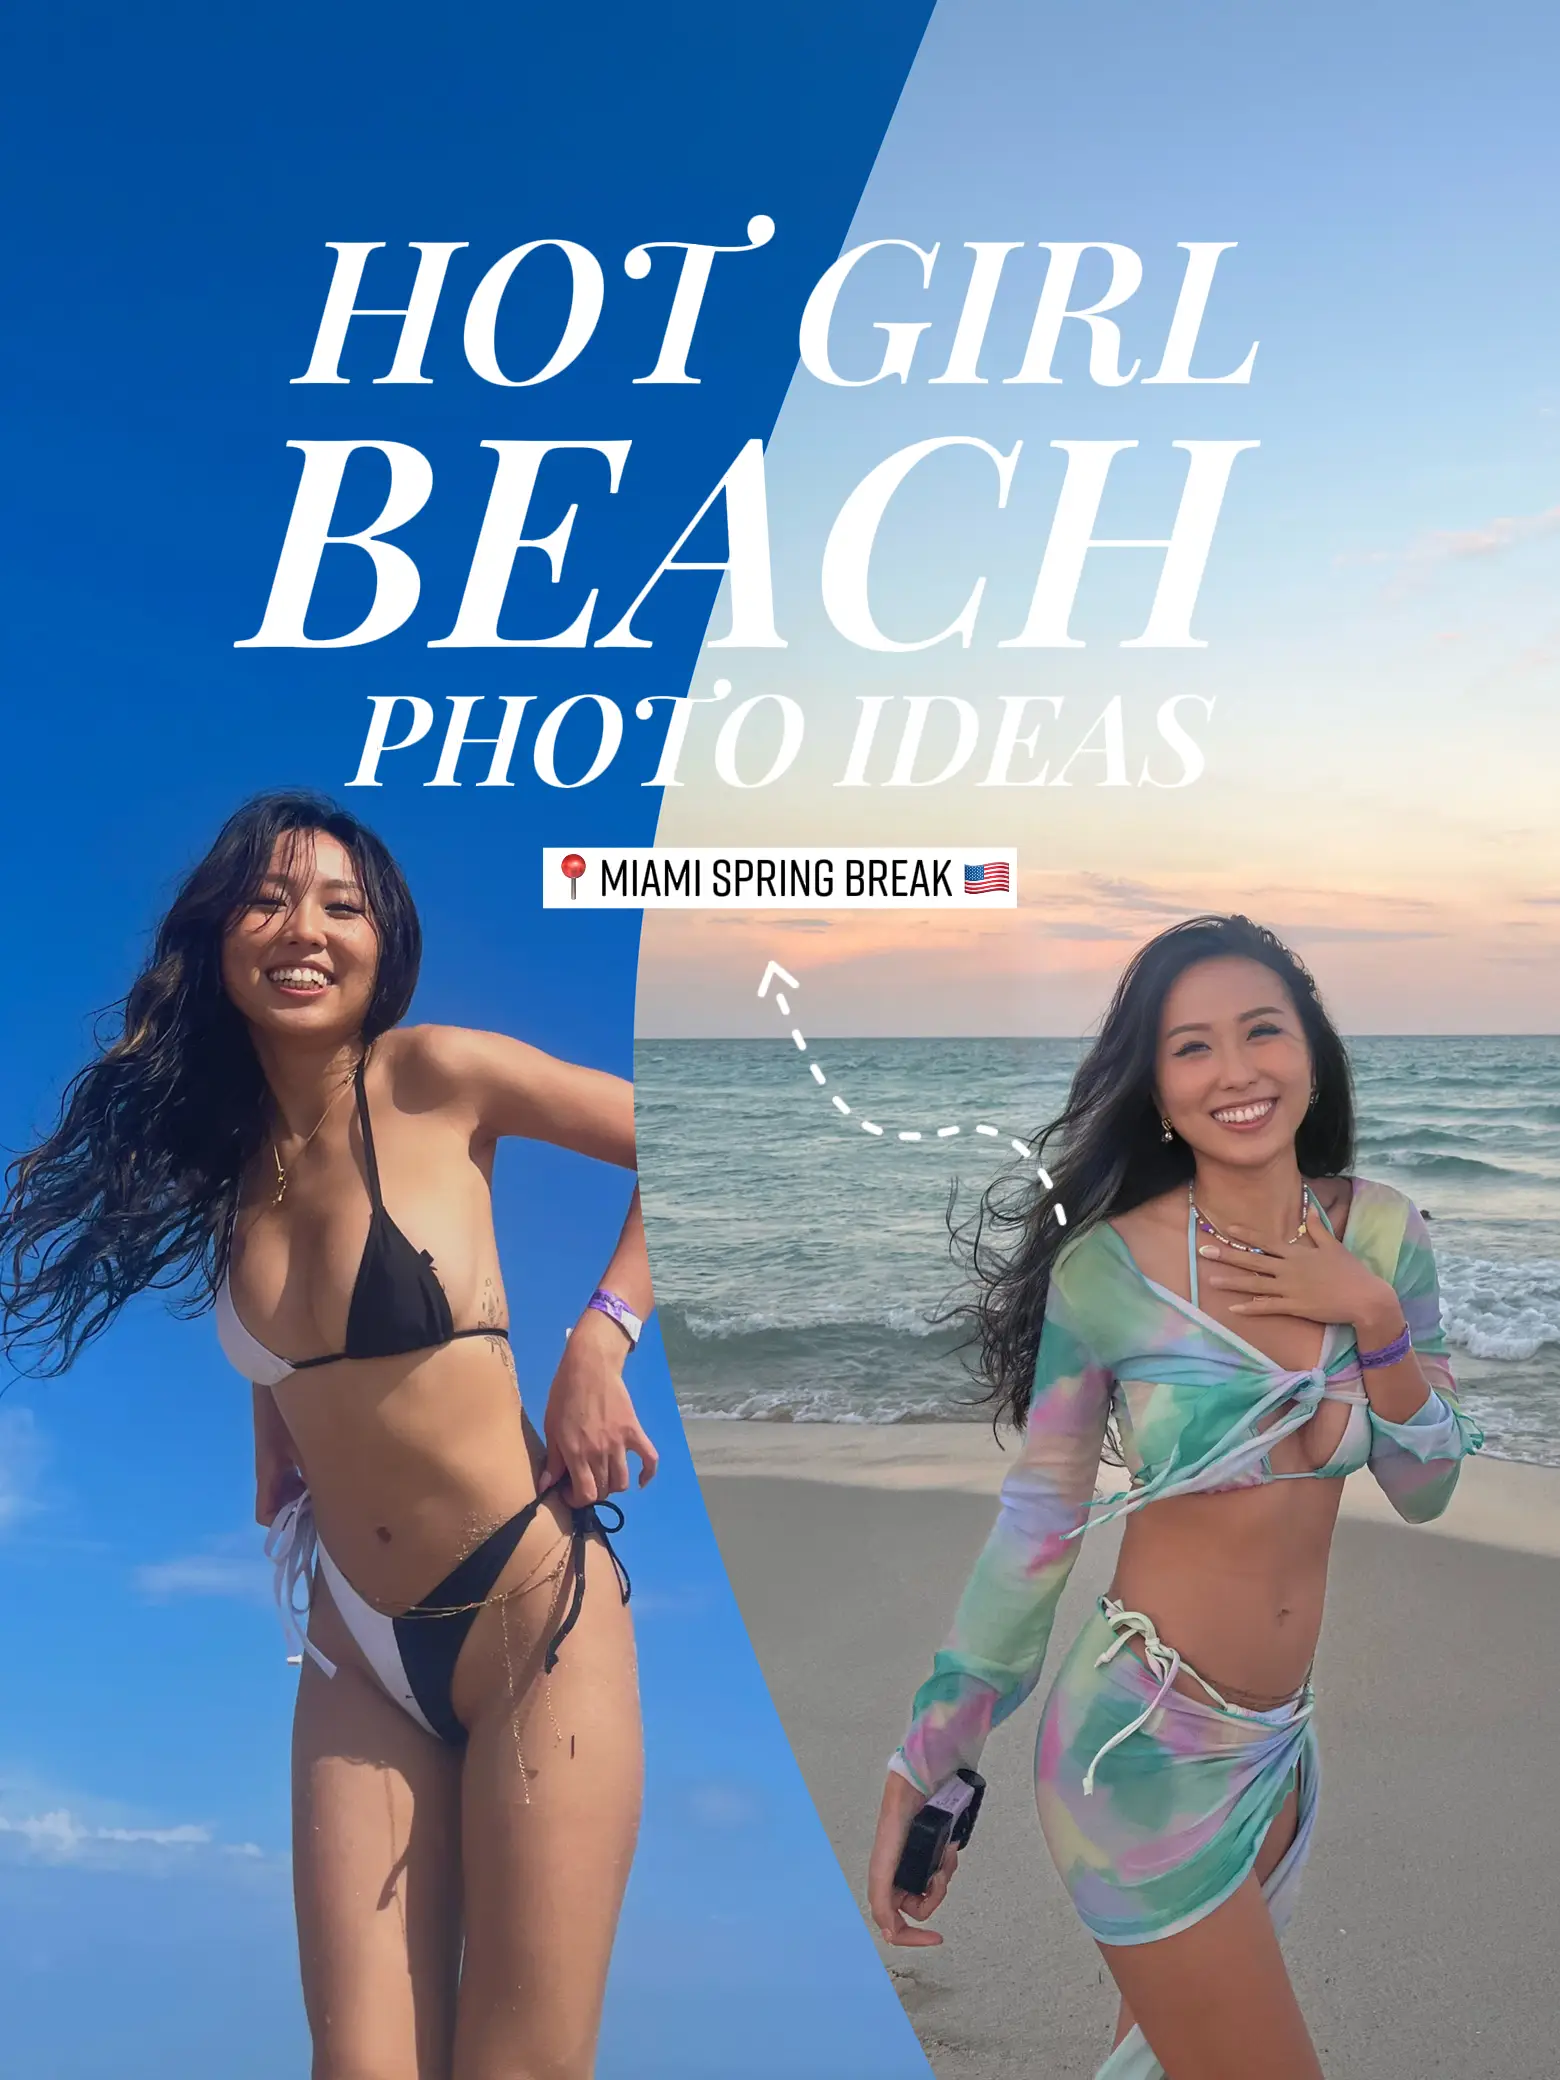 cj hamlett recommends Hot Girl On The Beach